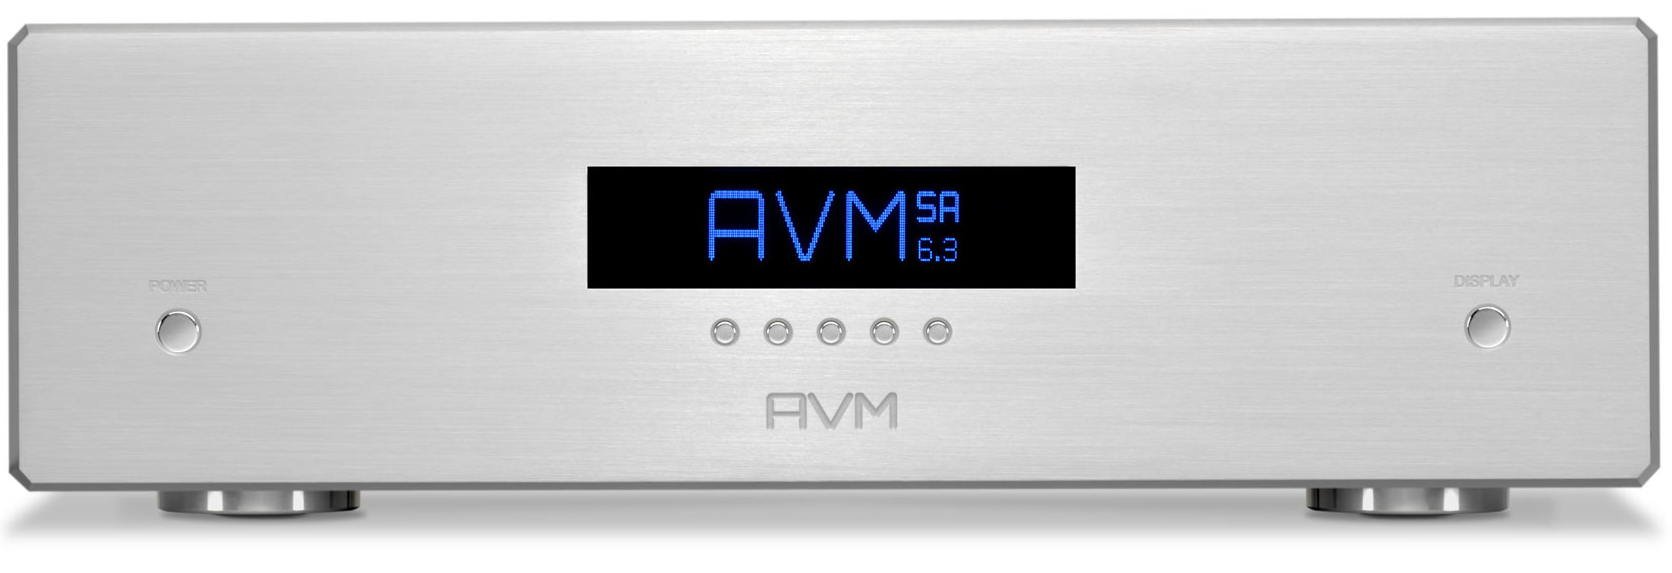 Усилитель мощности AVM SA 6.3 Silver